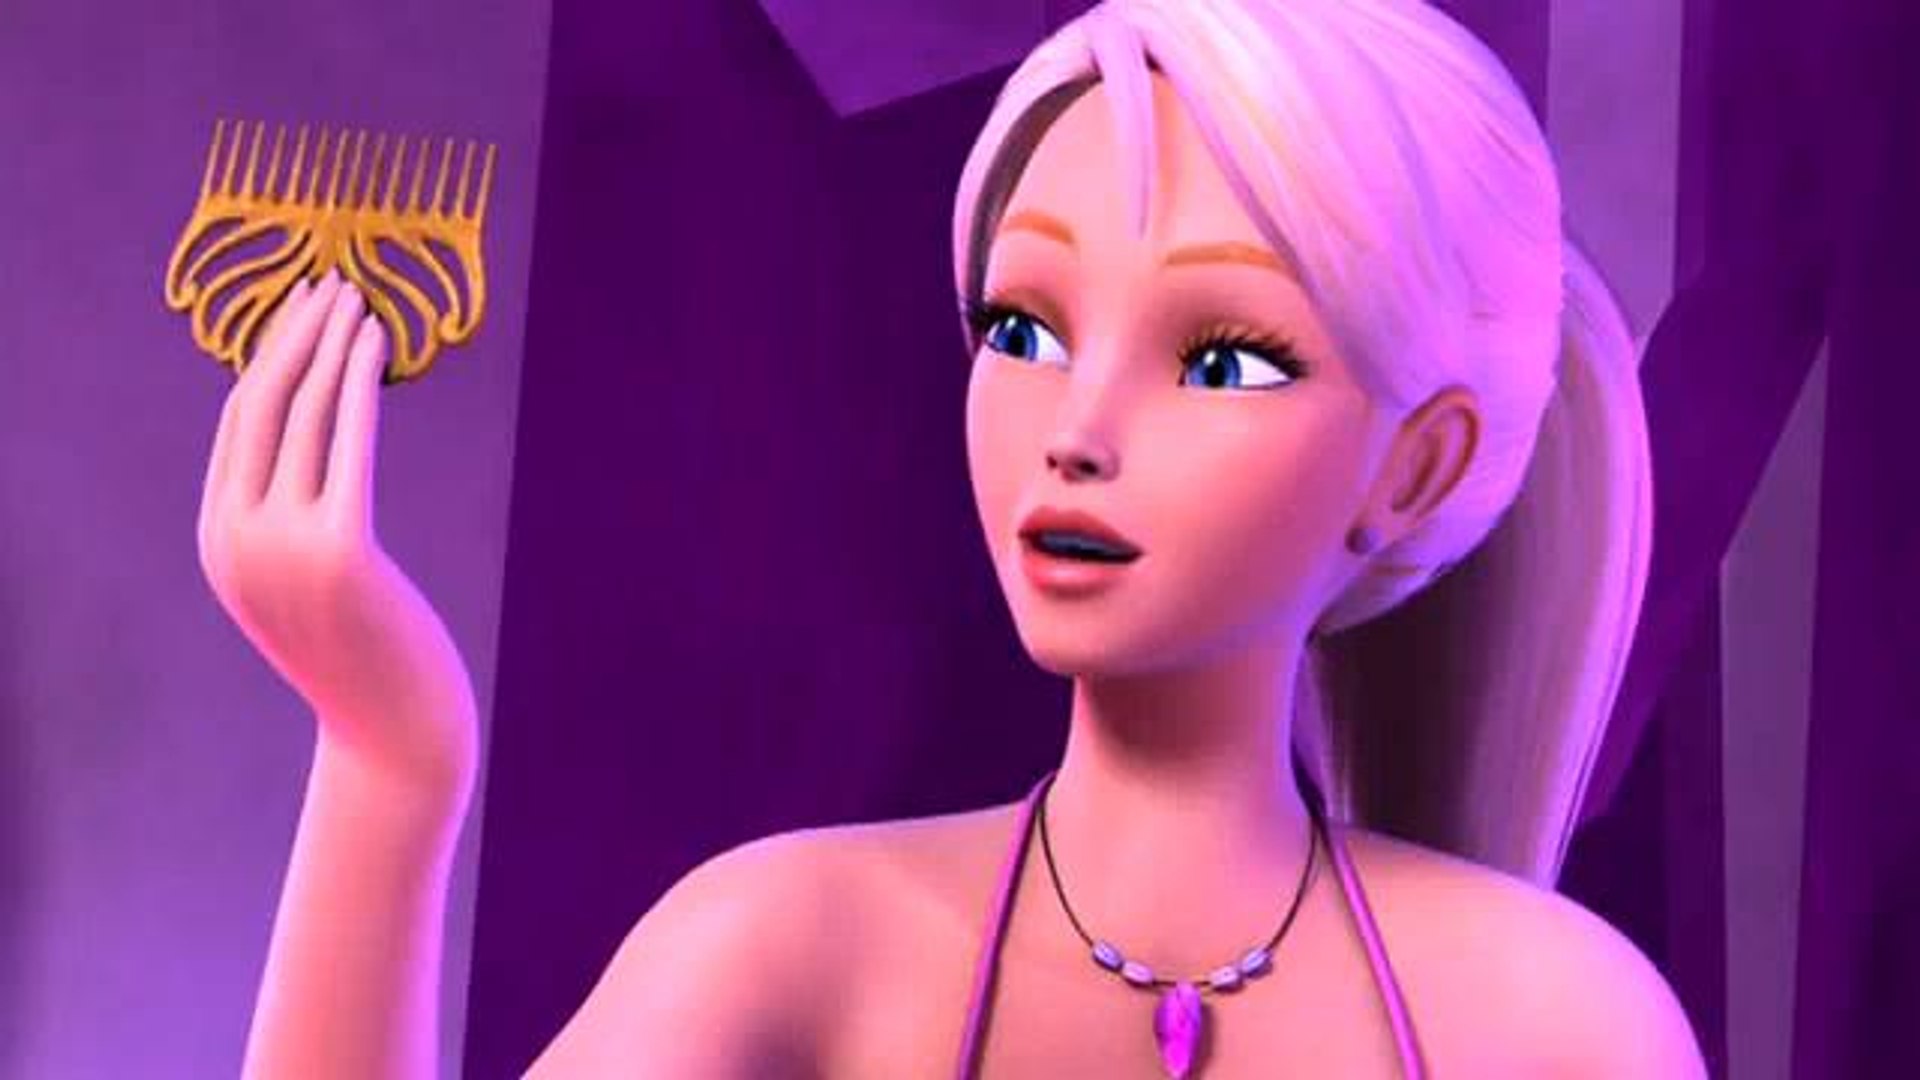 Barbie mermaid tale 2 full movie in english part 1 Barbie In A Mermaid Tale Complite Video Part Ii Video Dailymotion